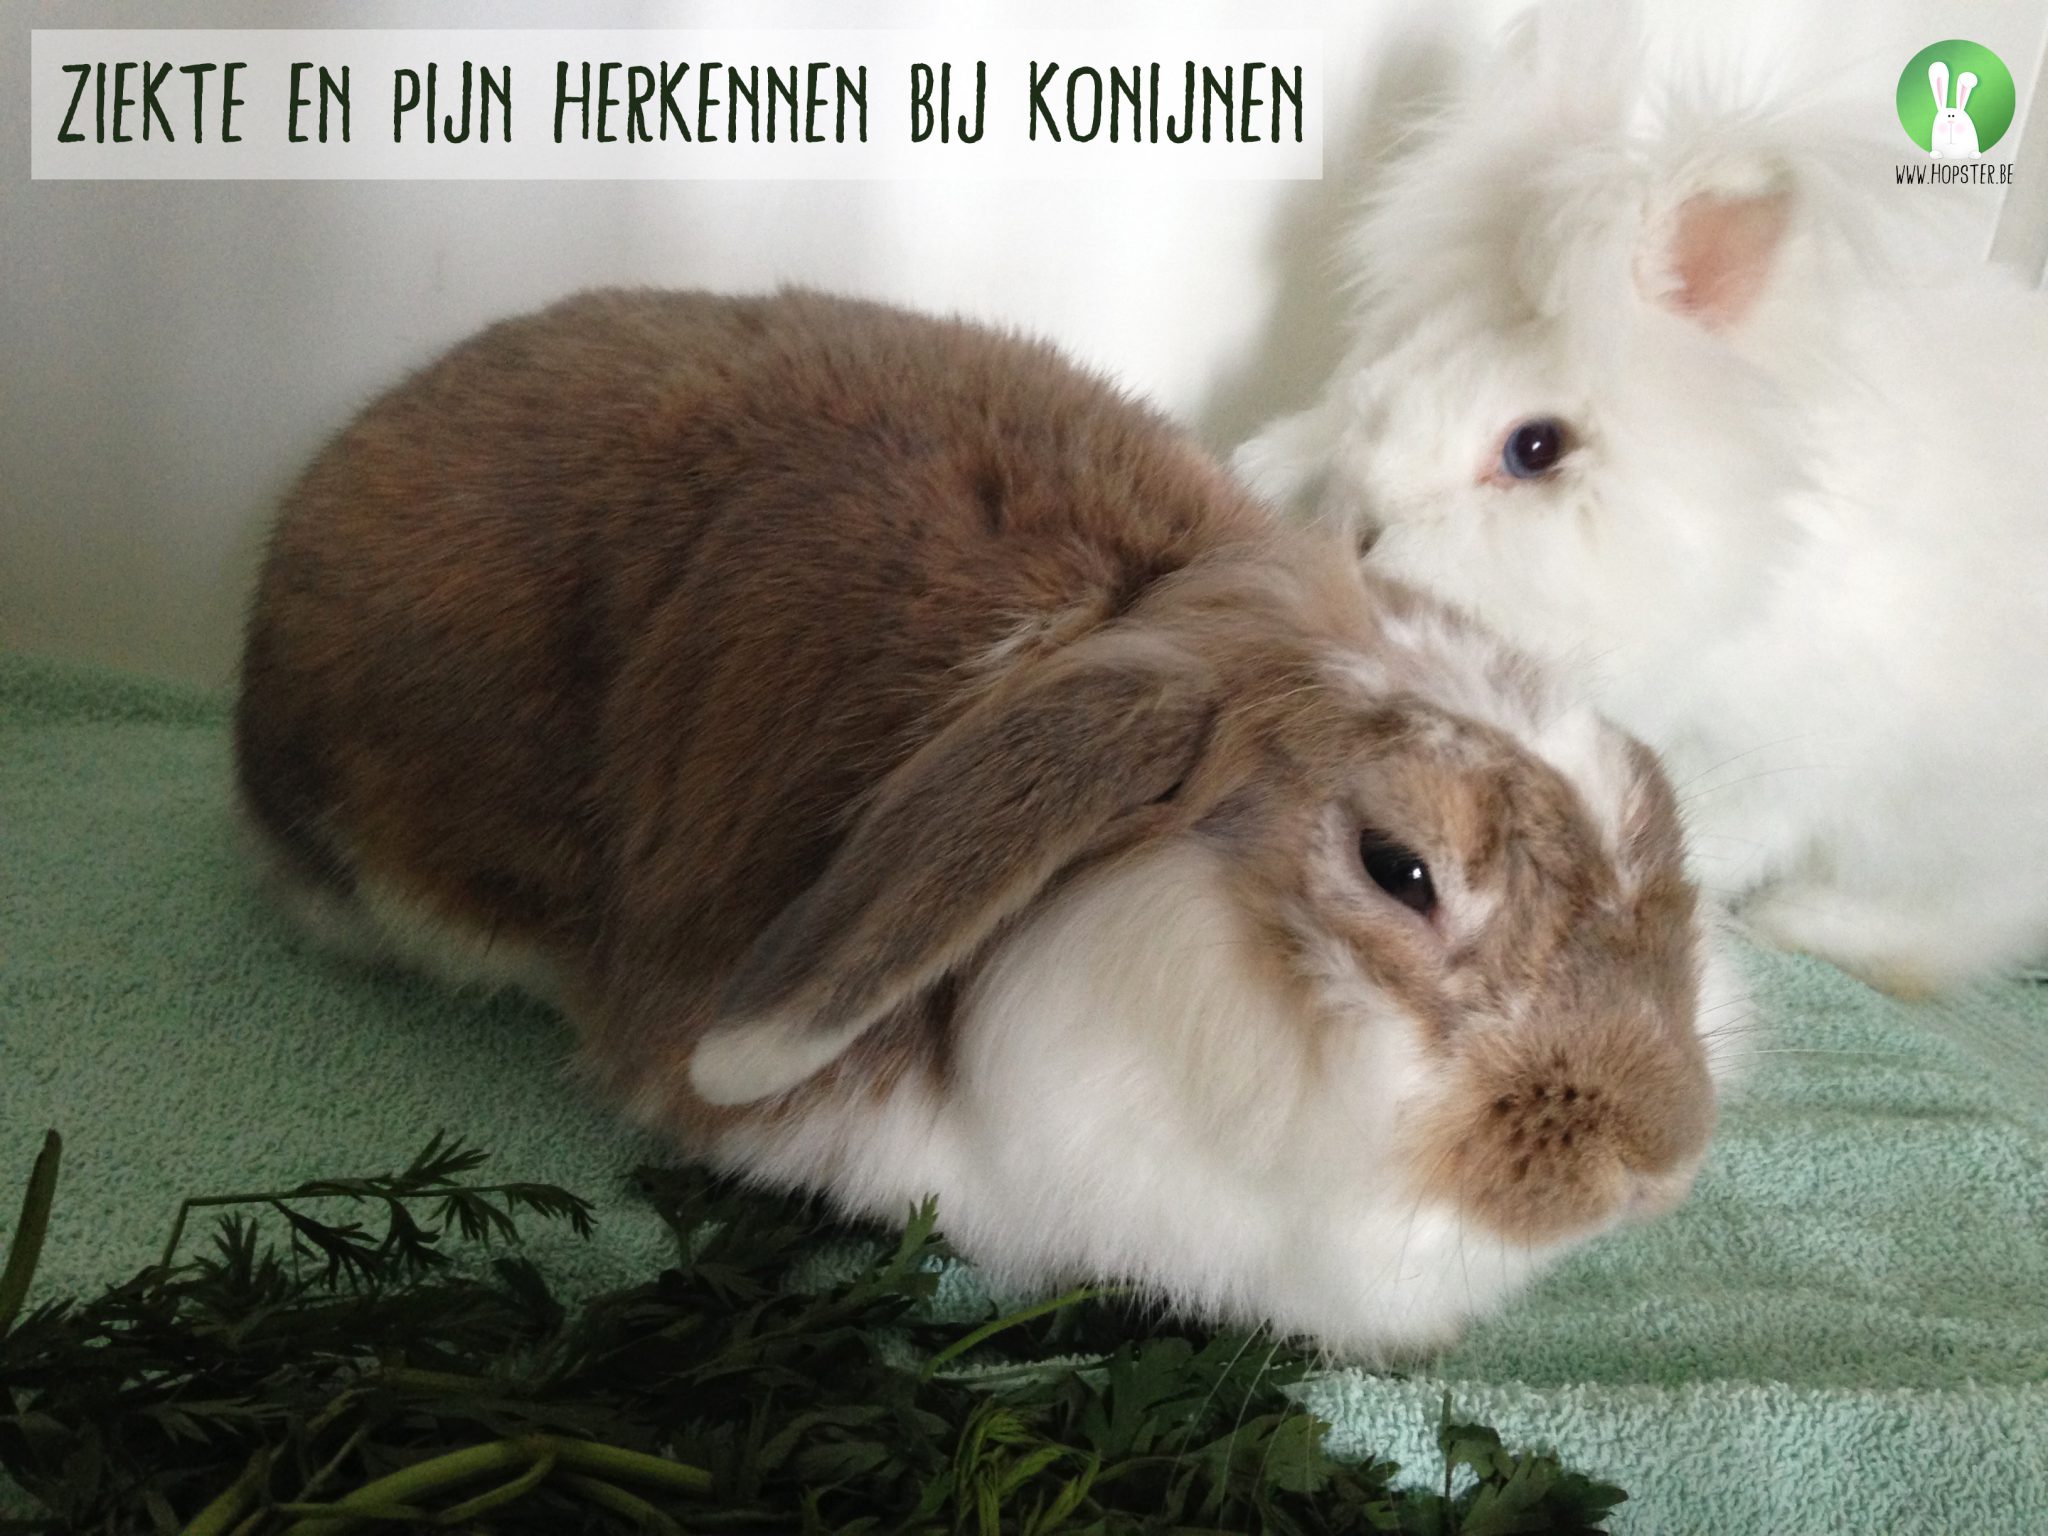 Ziekte en pijn herkennen bij konijnen | Konijnenadviesbureau Hopster